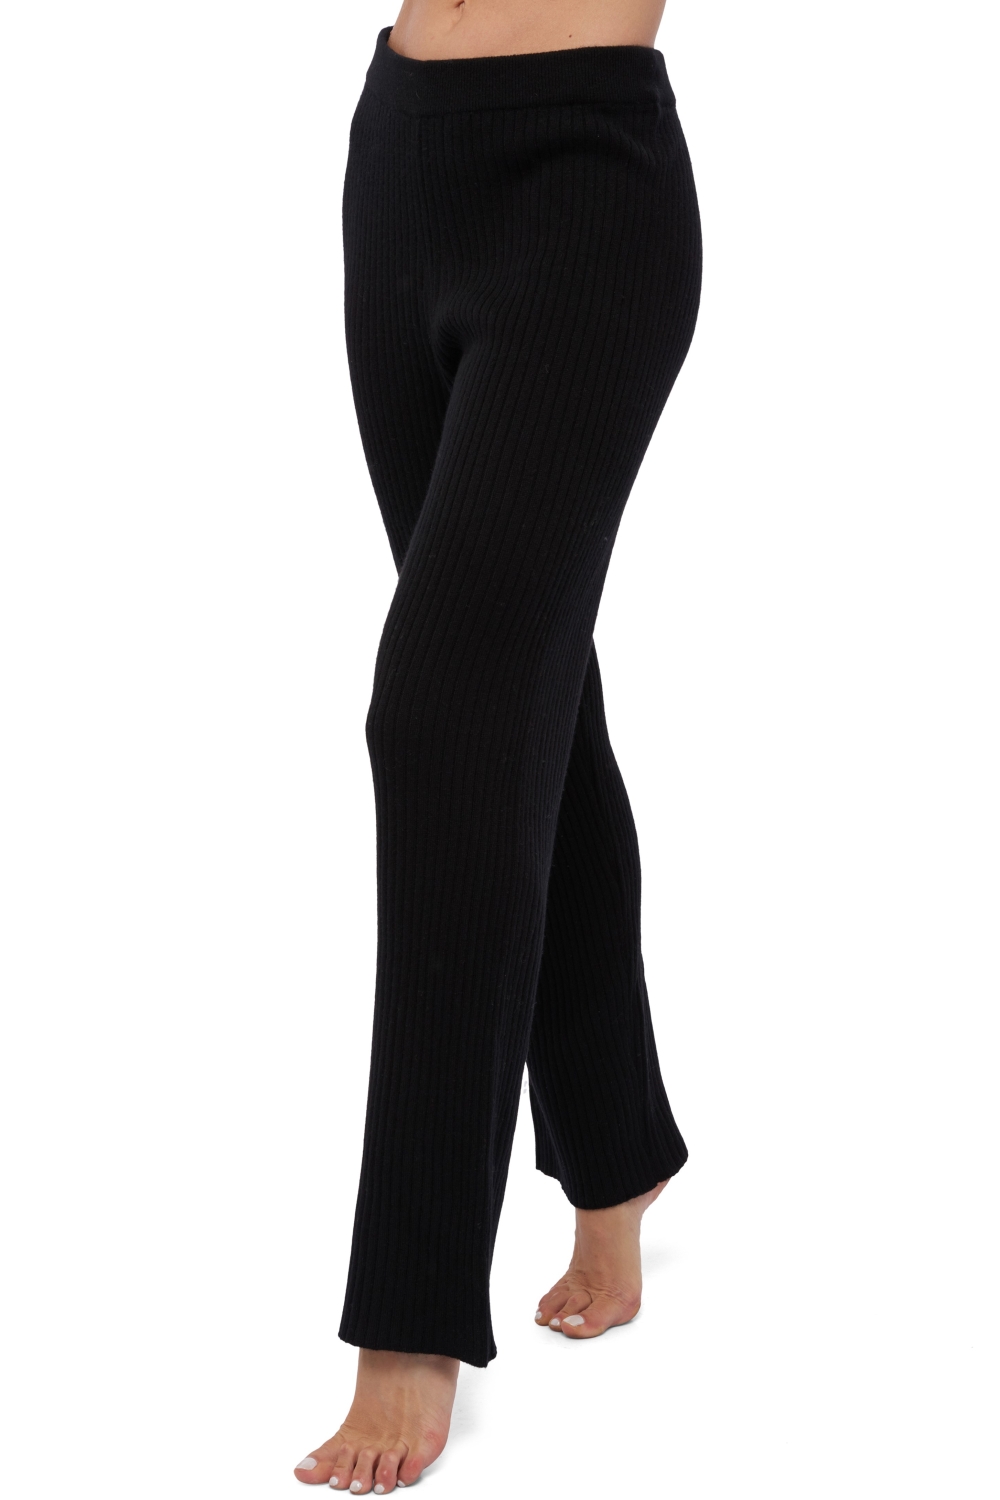 Cachemire pantalon legging femme avignon noir 2xl